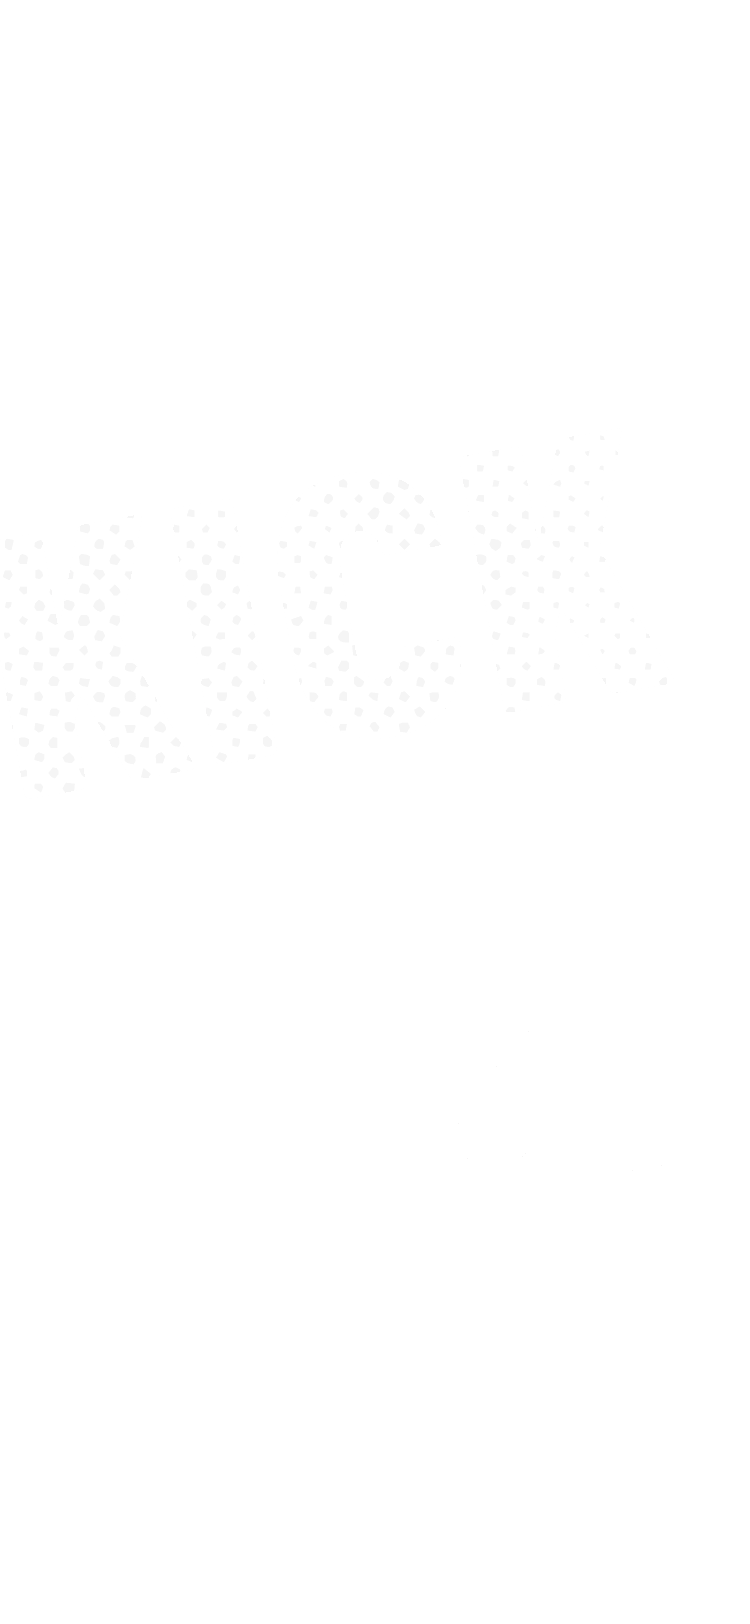 Kick it up a notch!